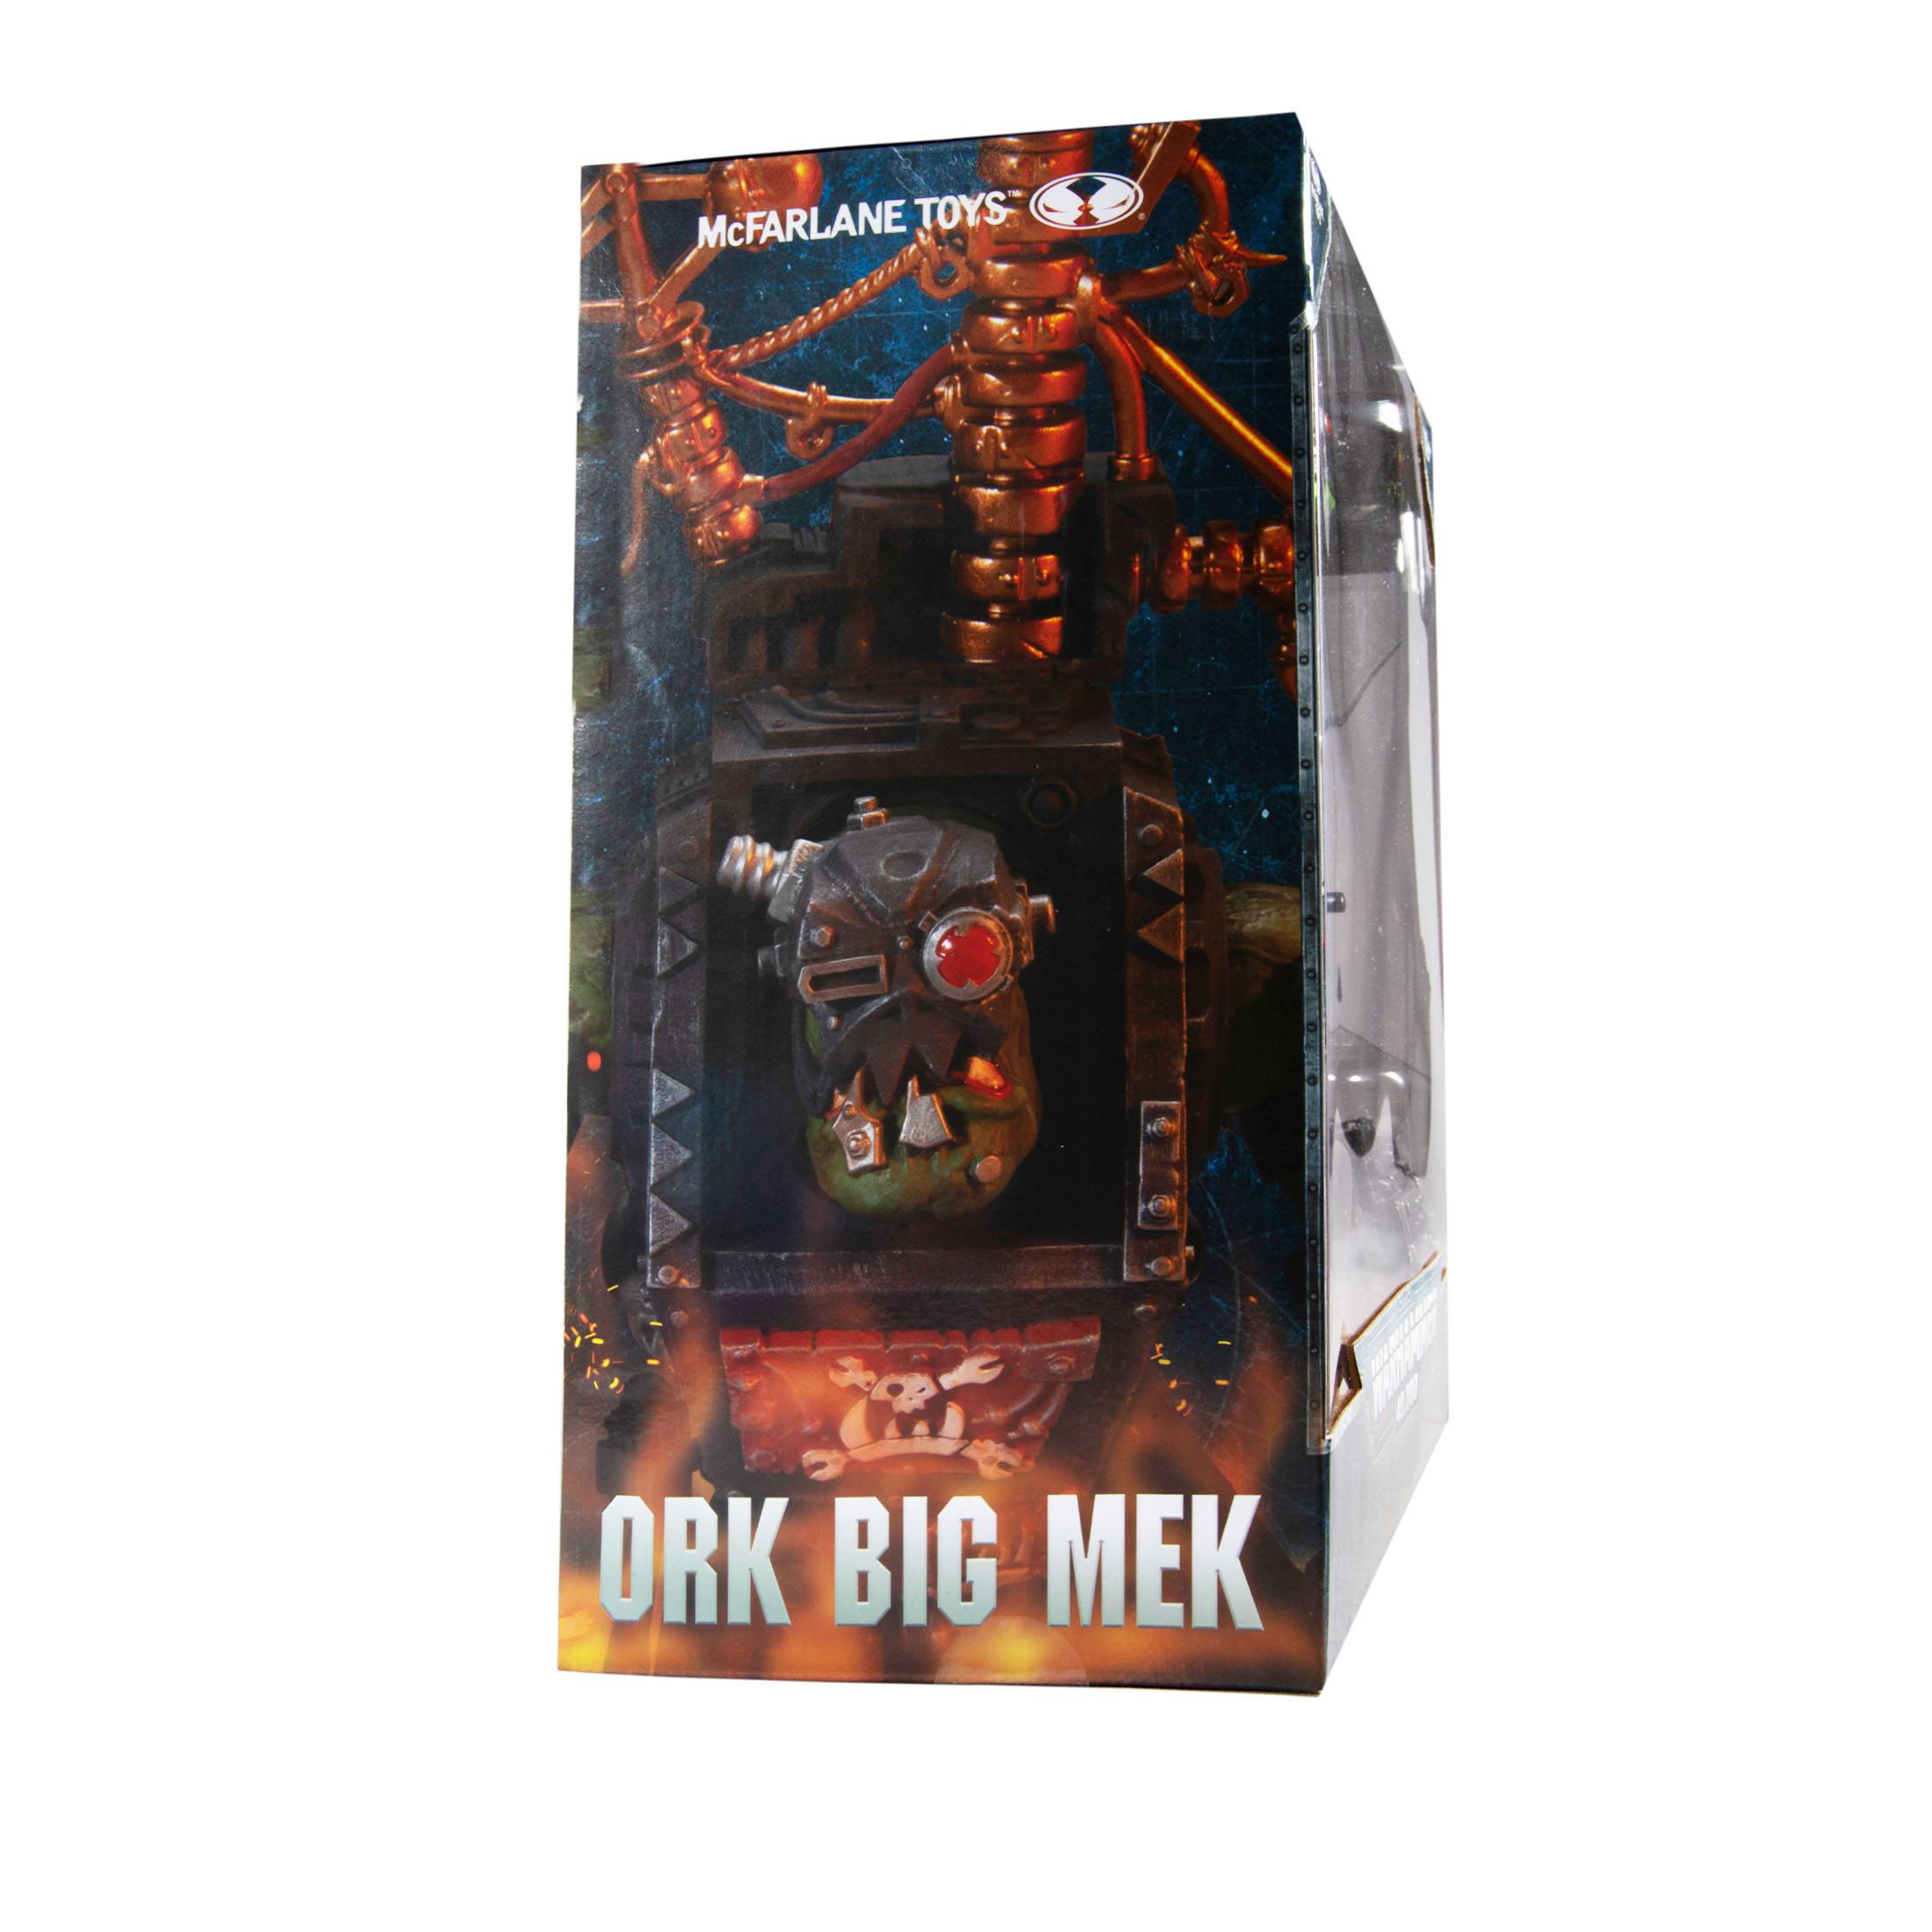 Warhammer 40k Actionfigur Ork Big Mek 30 cm MCF11979 787926119794